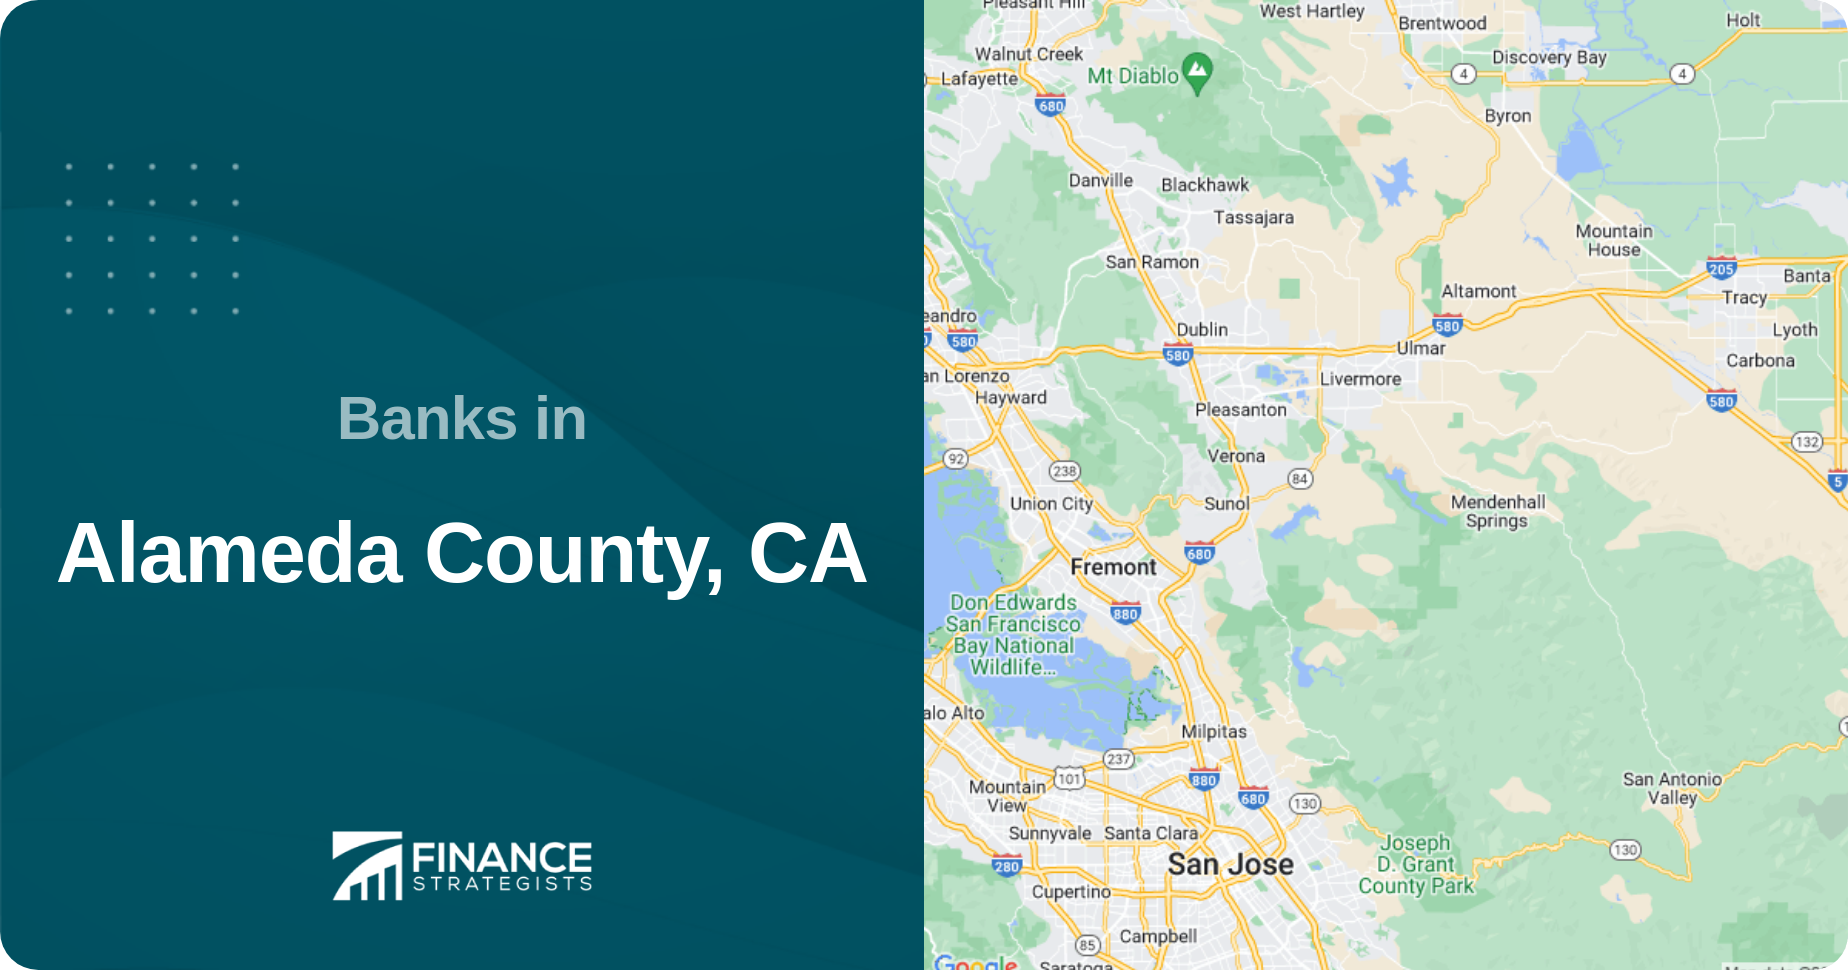 Banks in Alameda County, CA